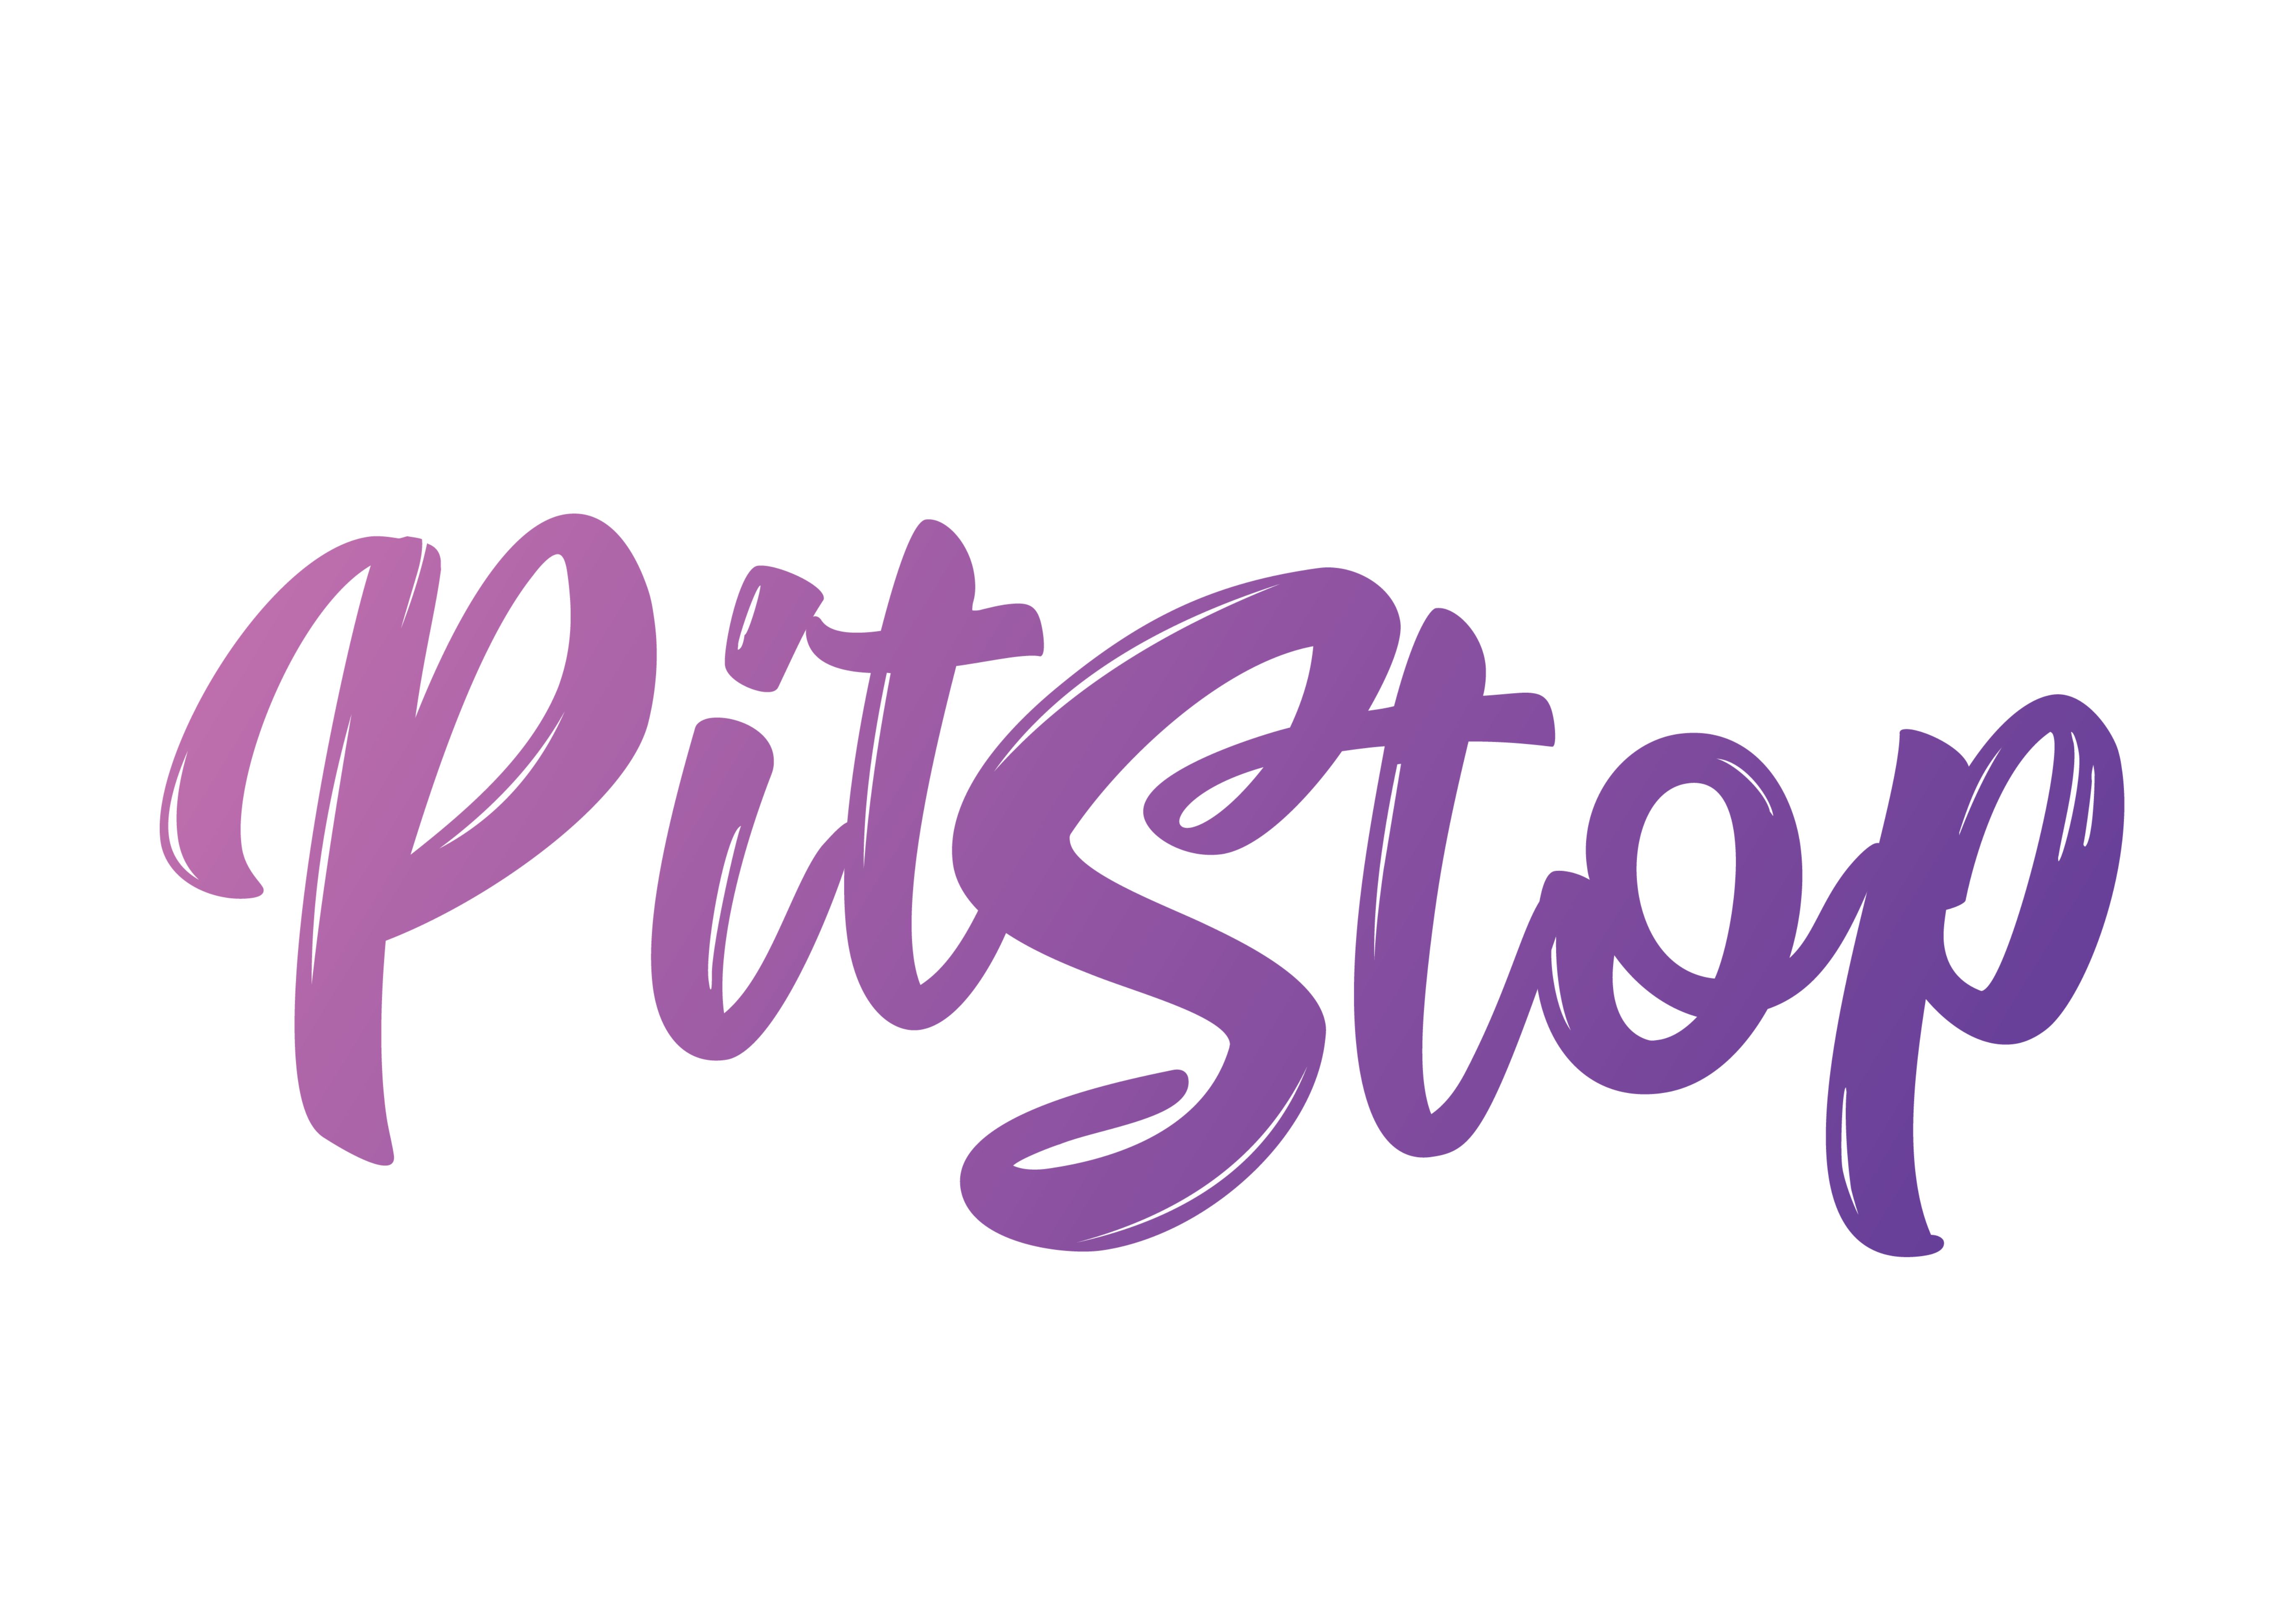 PitStop Logo